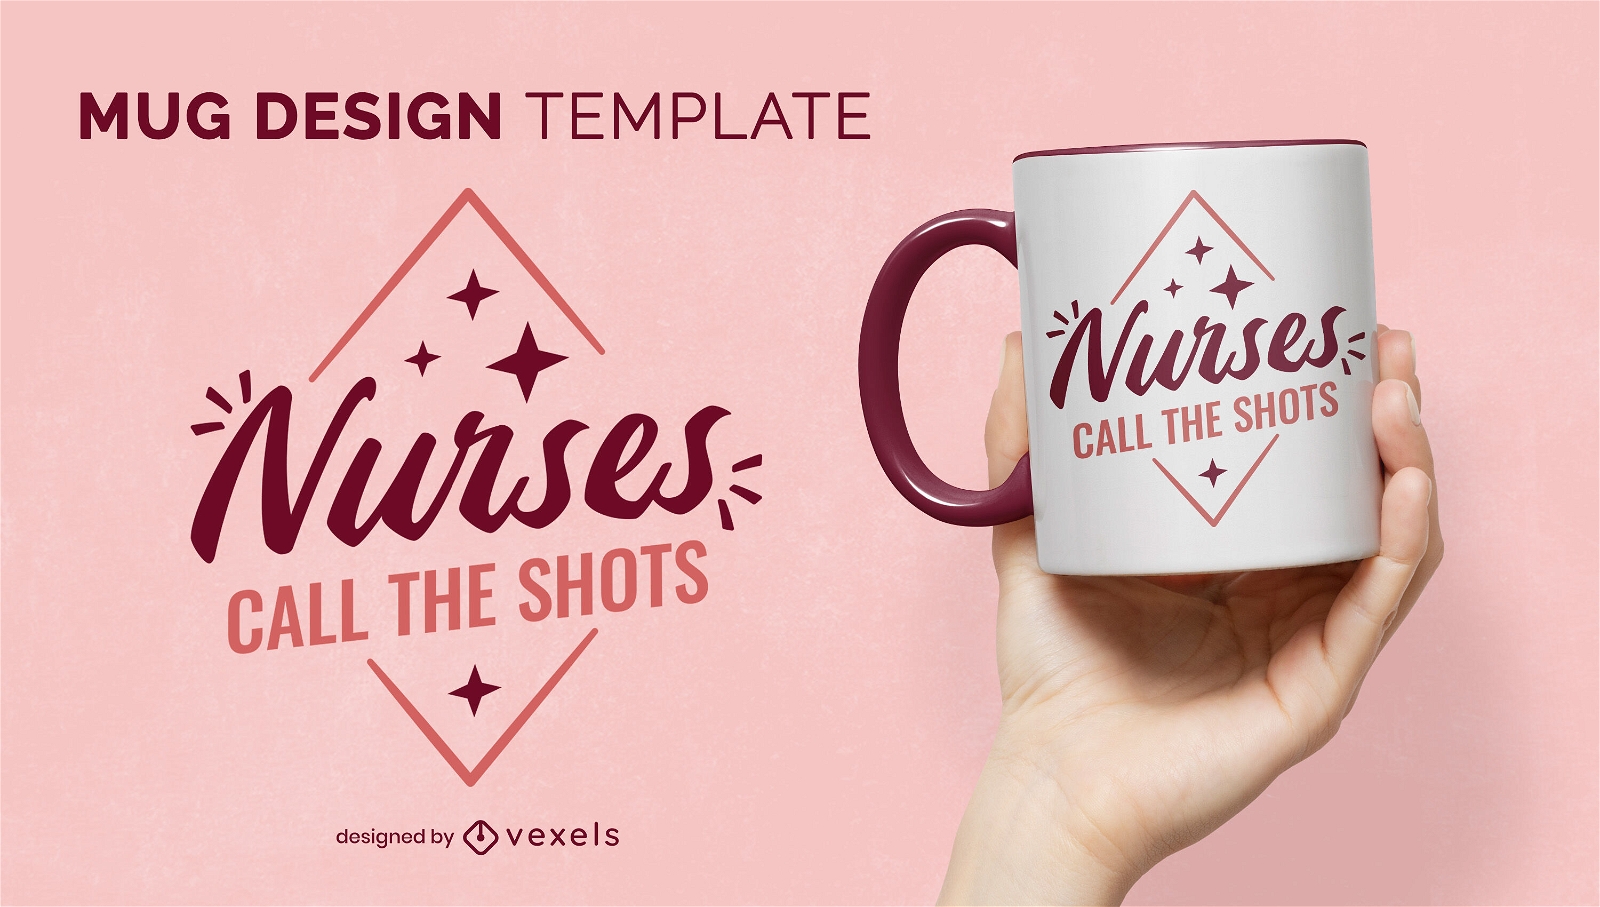 Nurses call the shots mug design